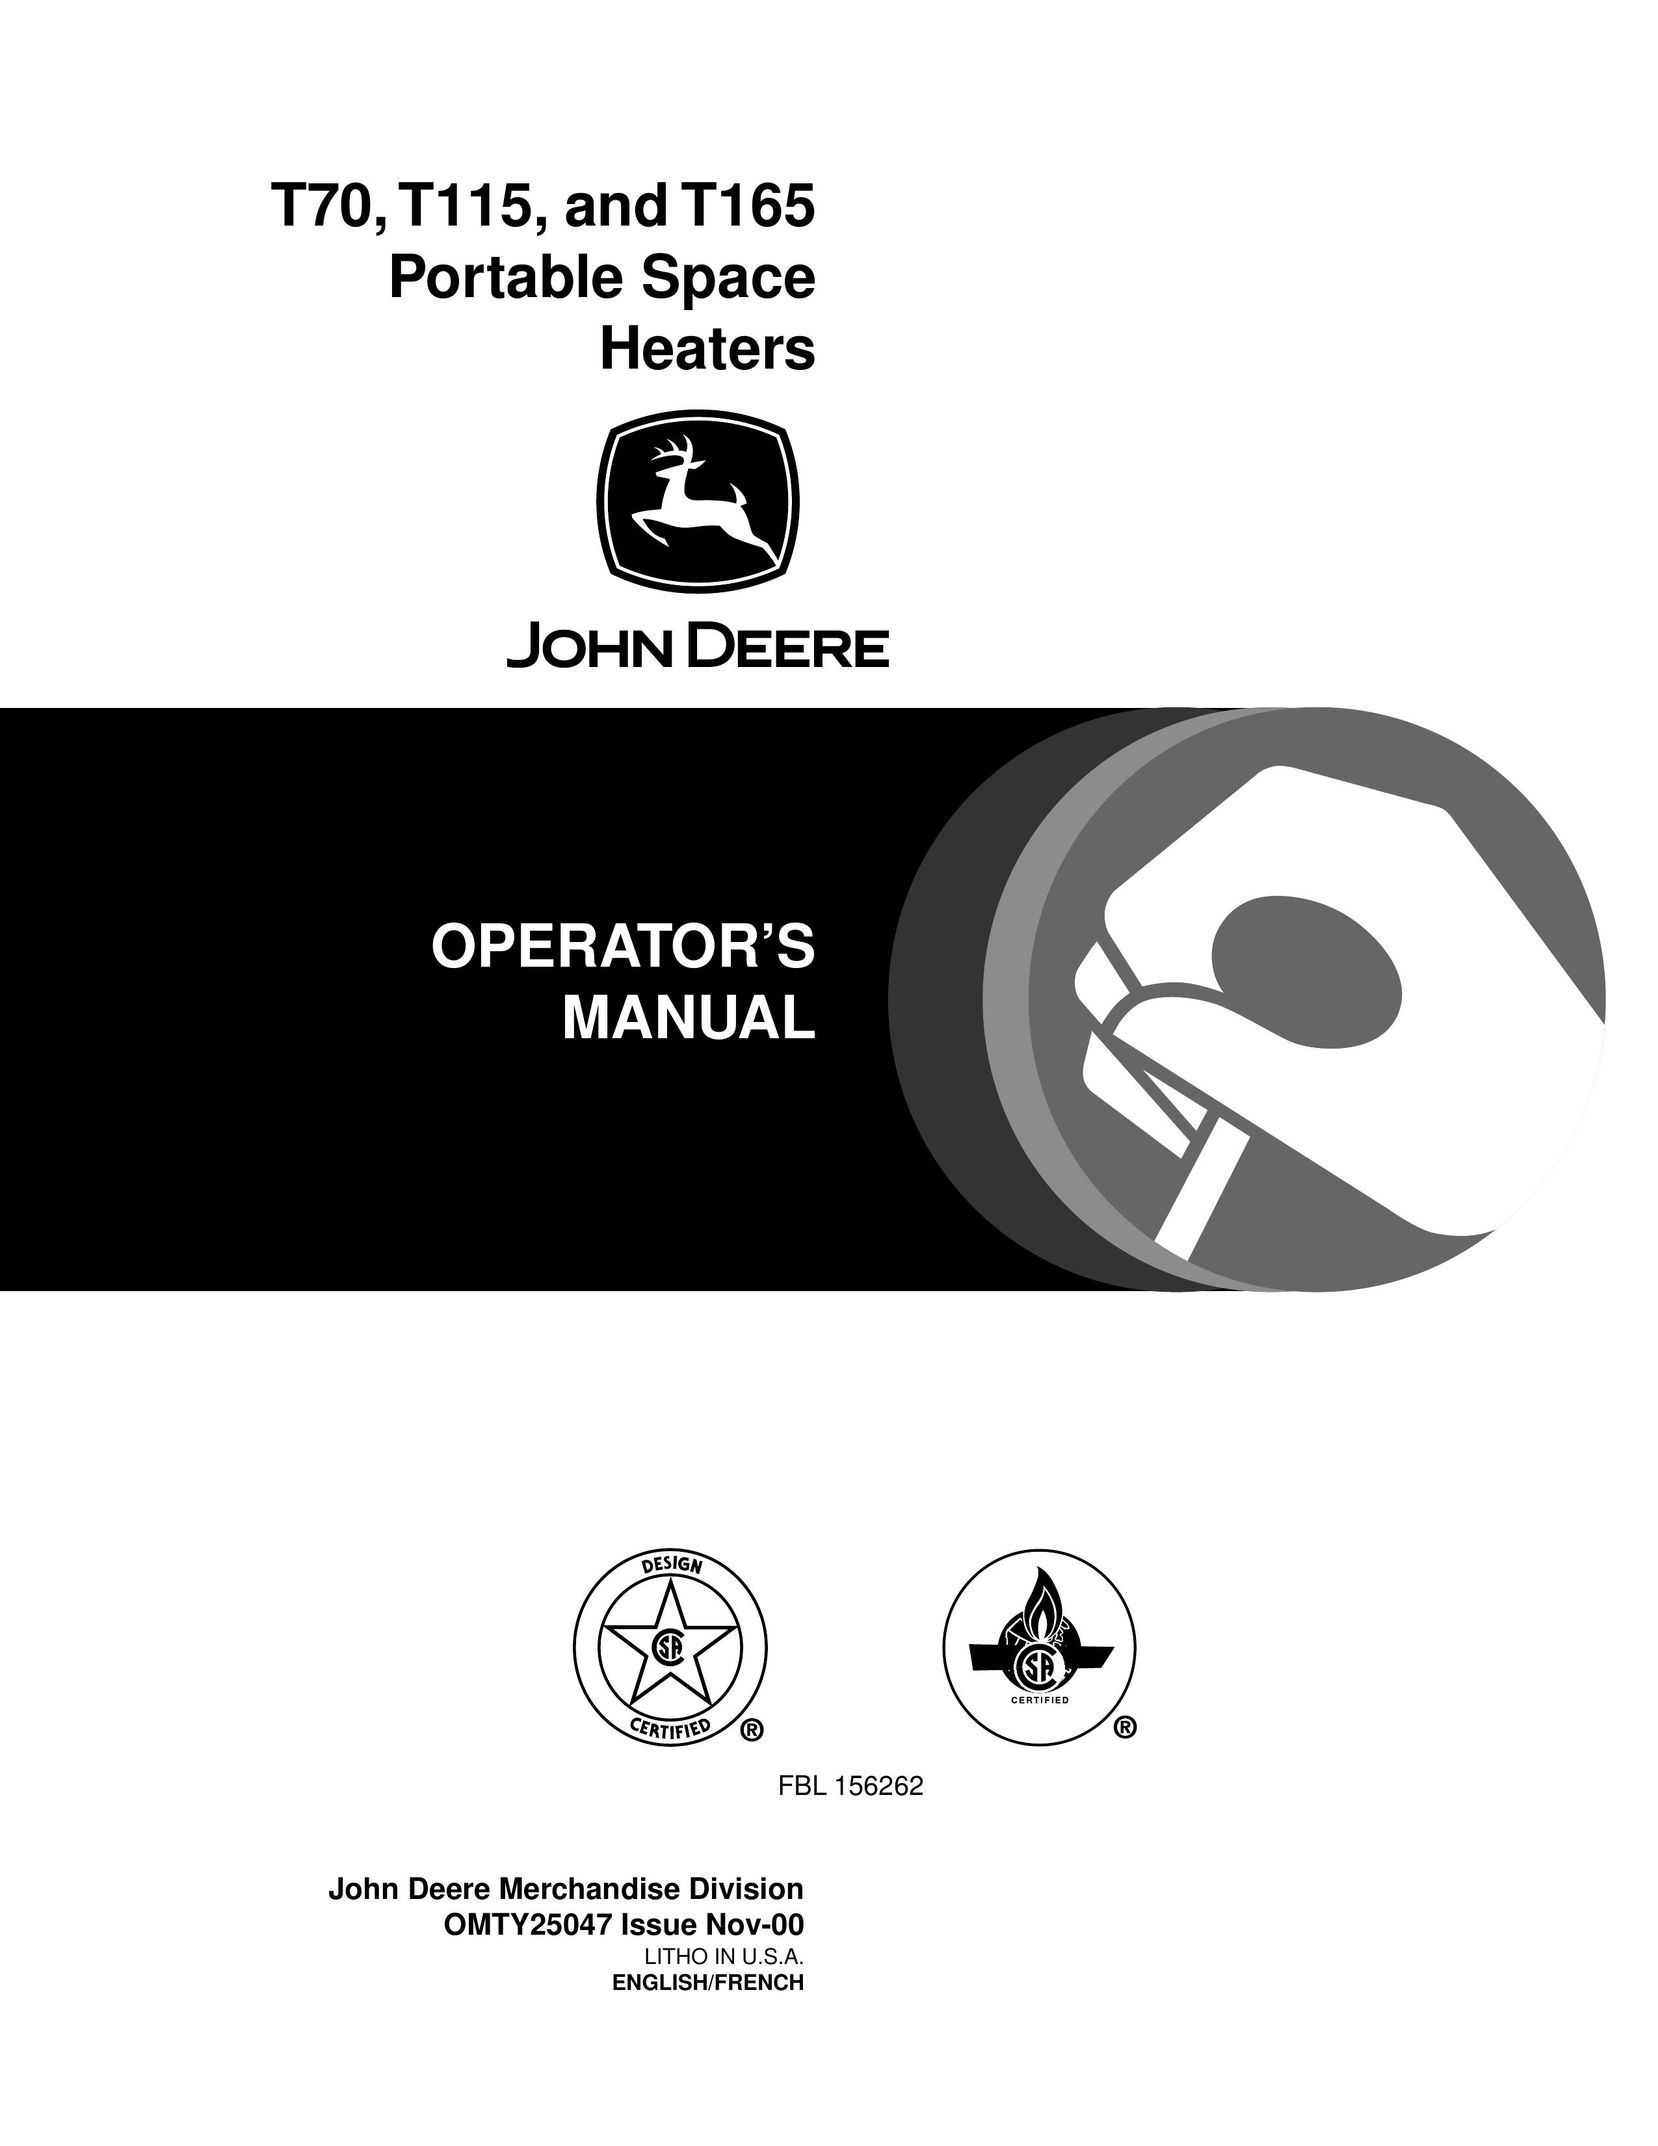 John Deere T70 Electric Heater User Manual